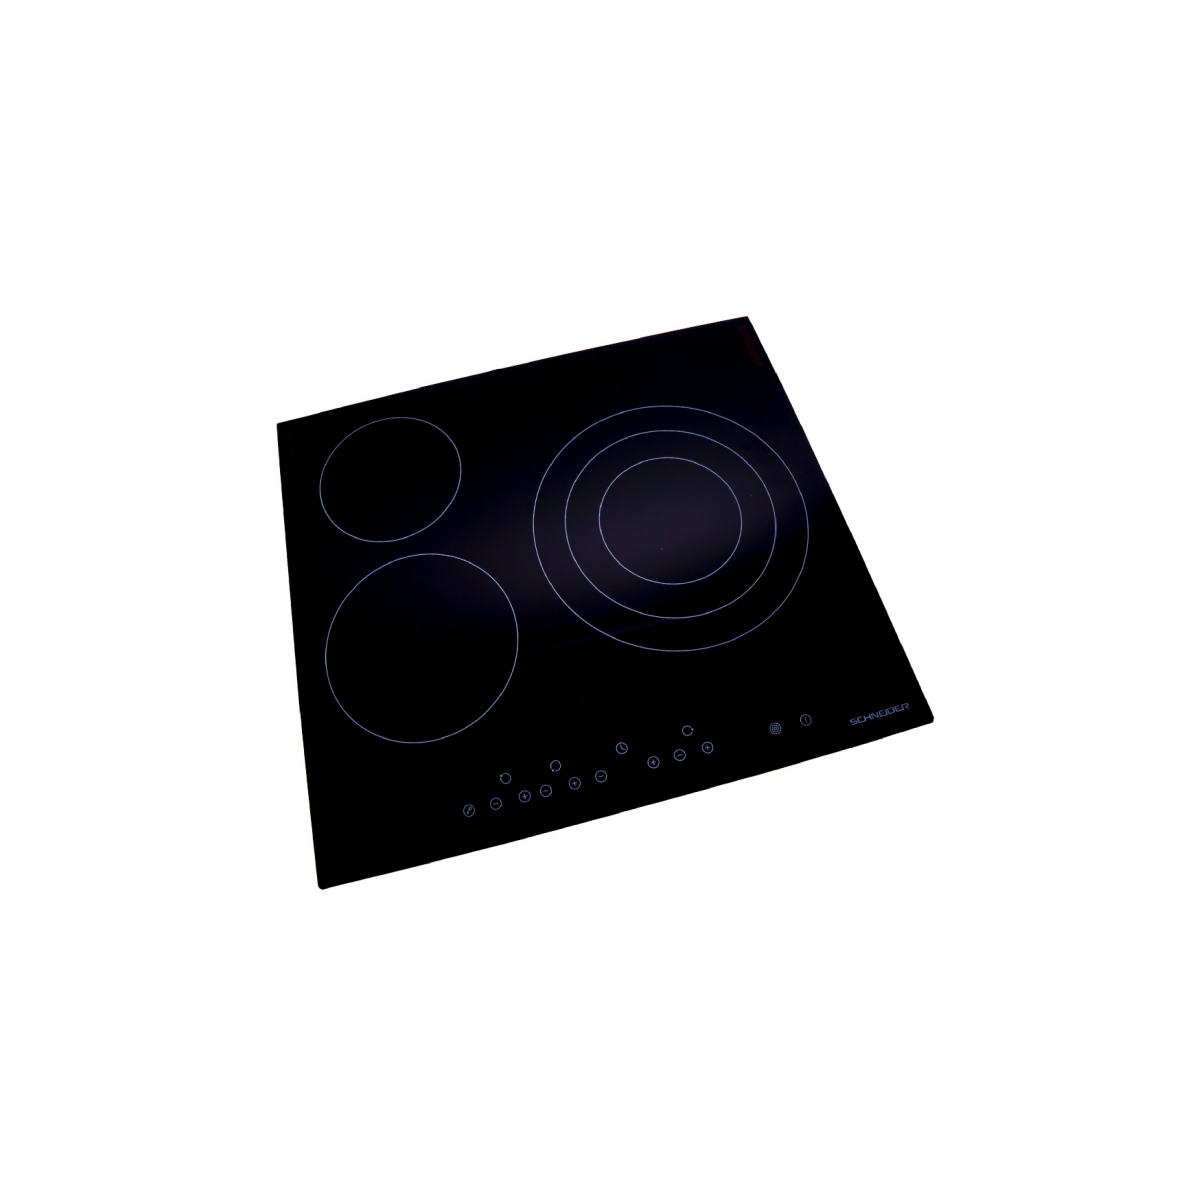 Placa vitrocerámica - SCHNEIDER SCCH603TSE1, 3 zonas, 59 cm, Negro